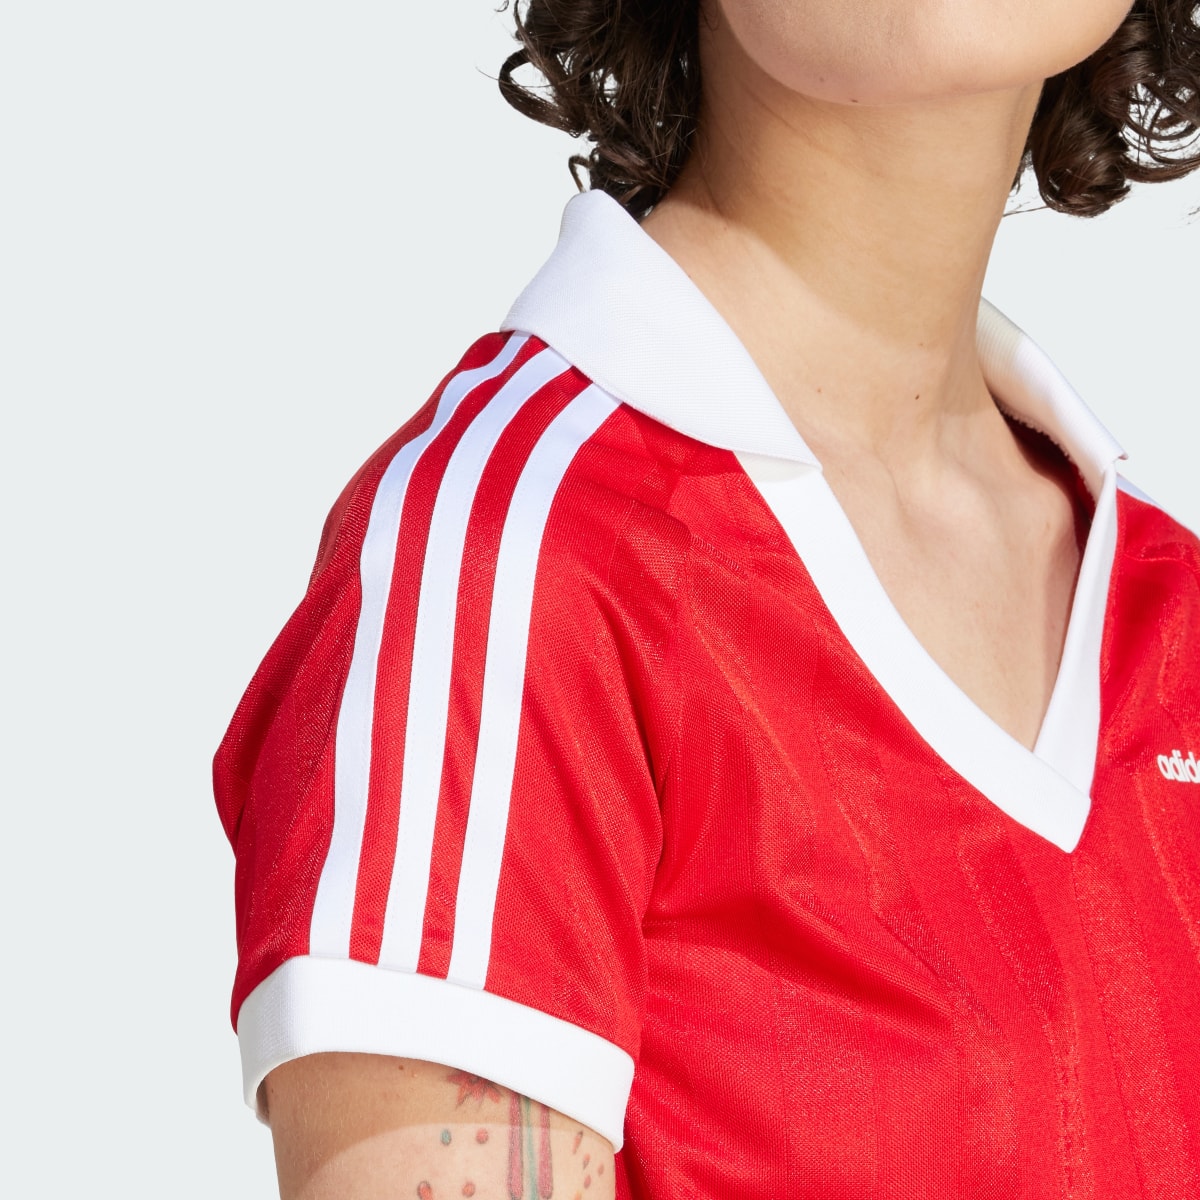 Adidas T-shirt Football Crop. 7